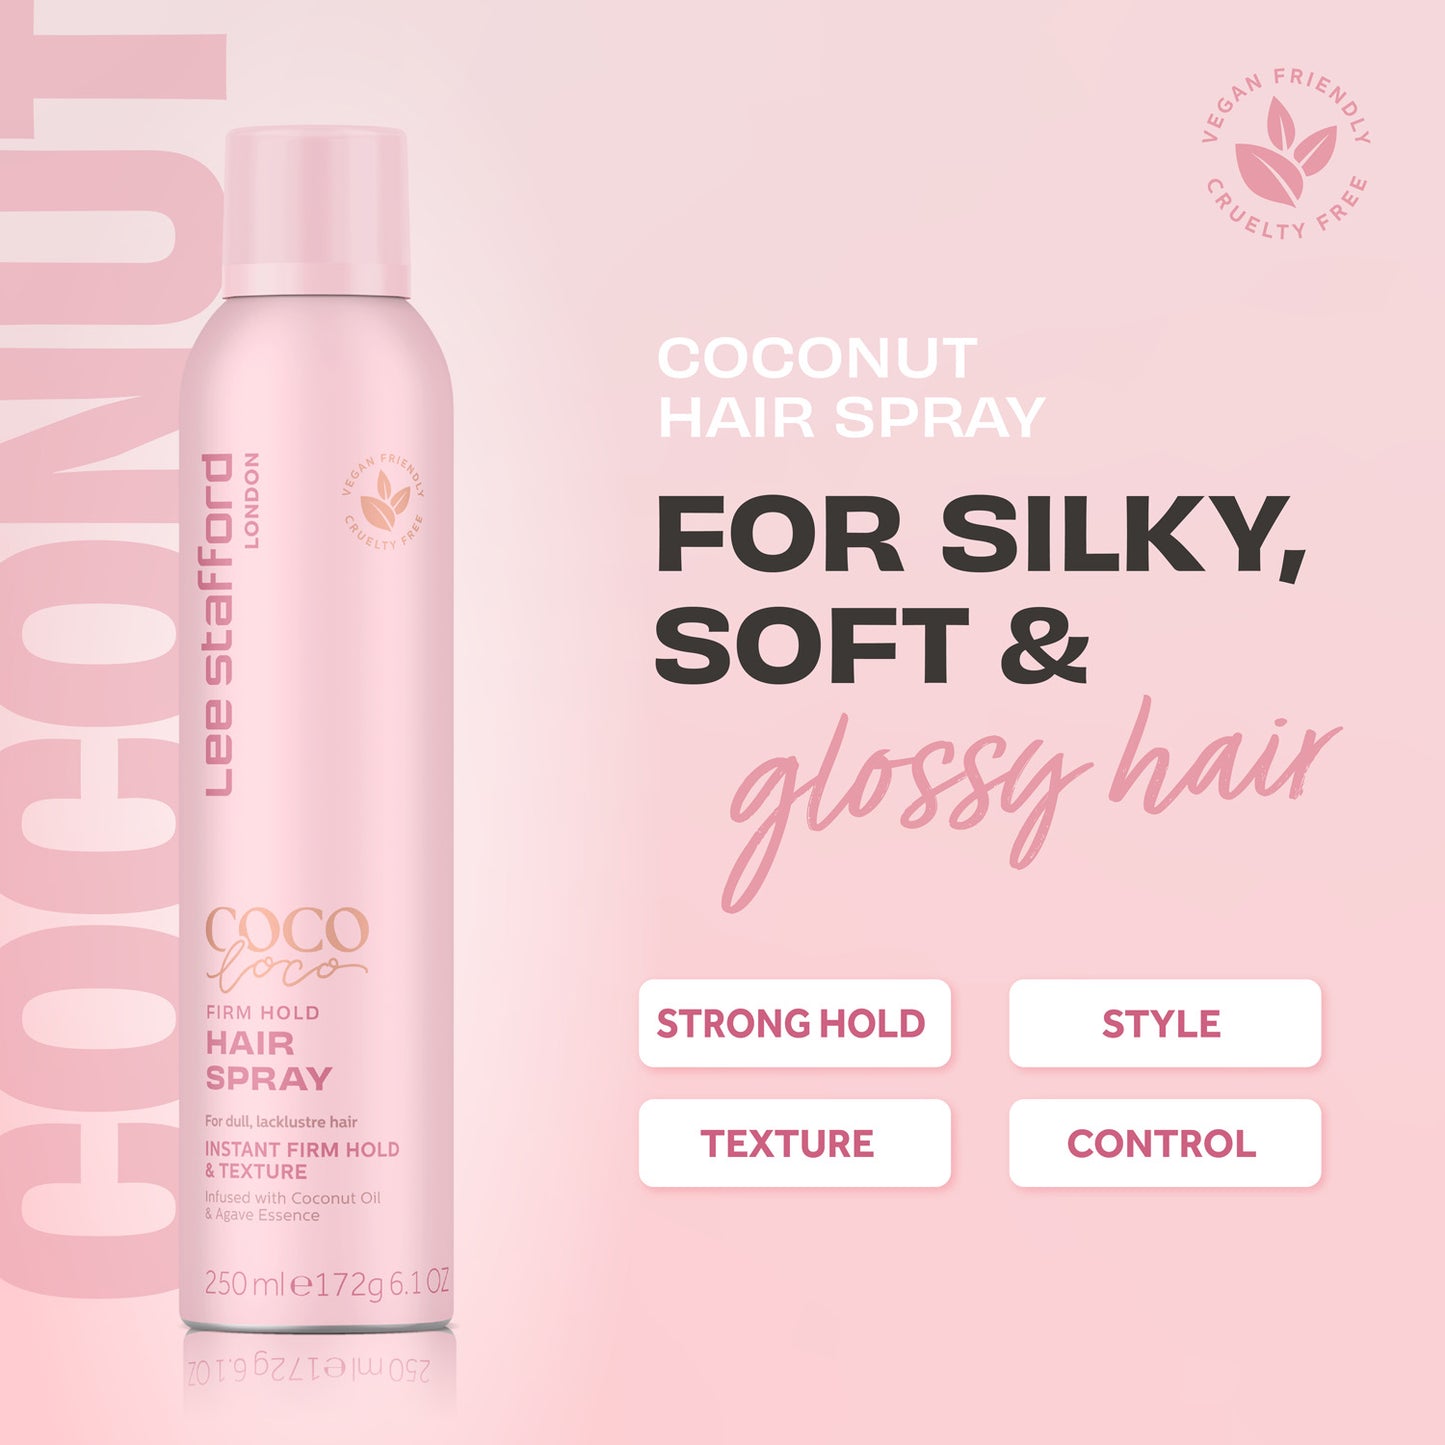 Coco Loco Firm Hold Hairspray